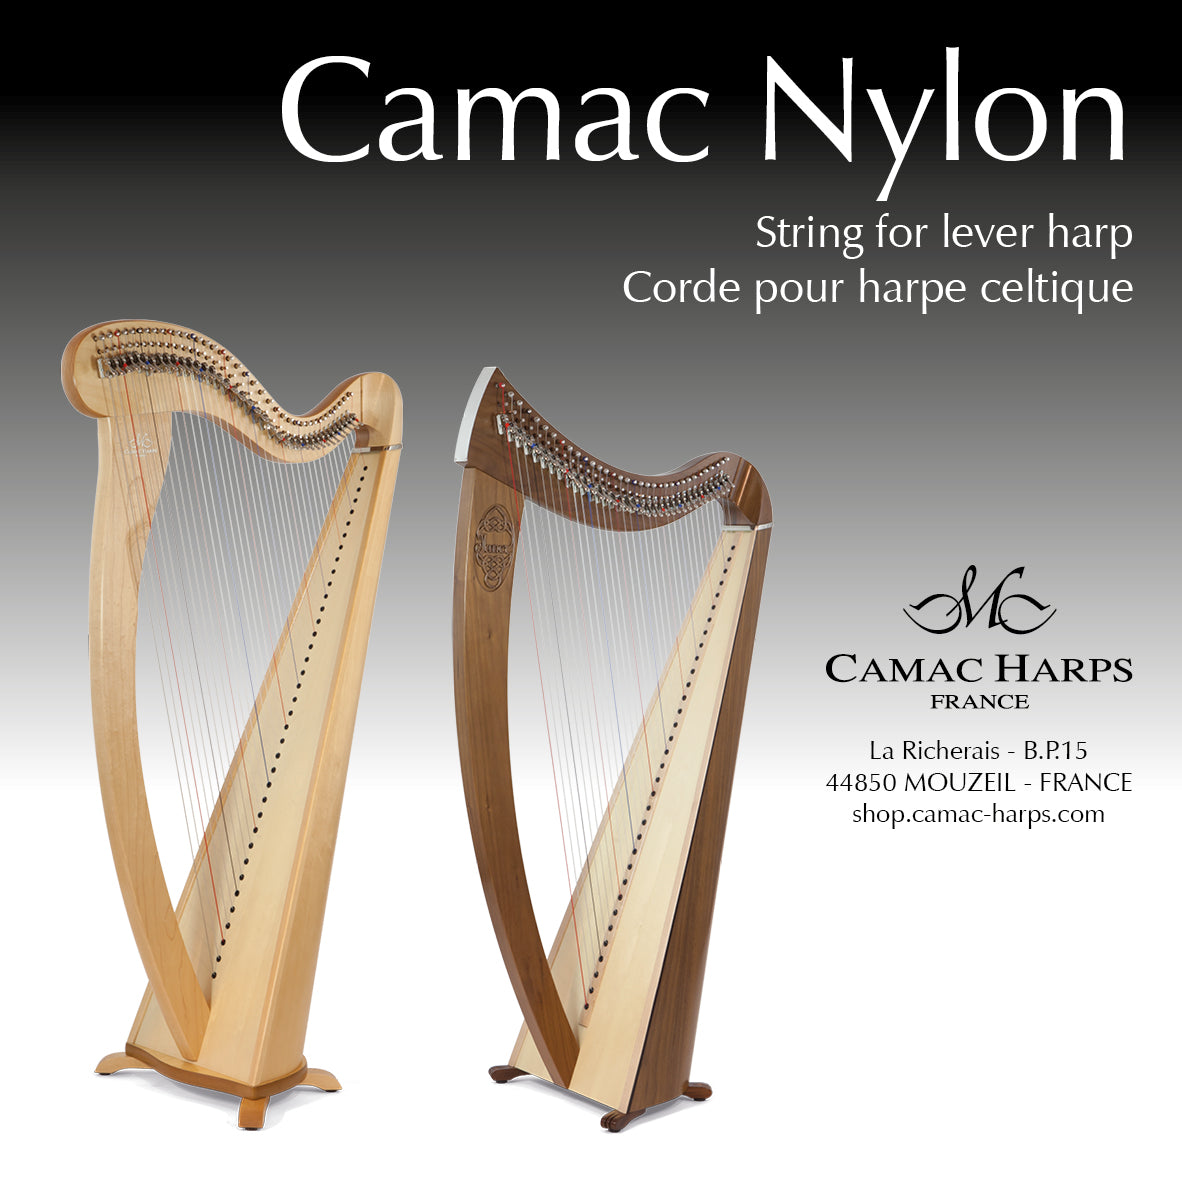 Corda Camac in nylon per arpa celtica a leva - 2 ott corda singola